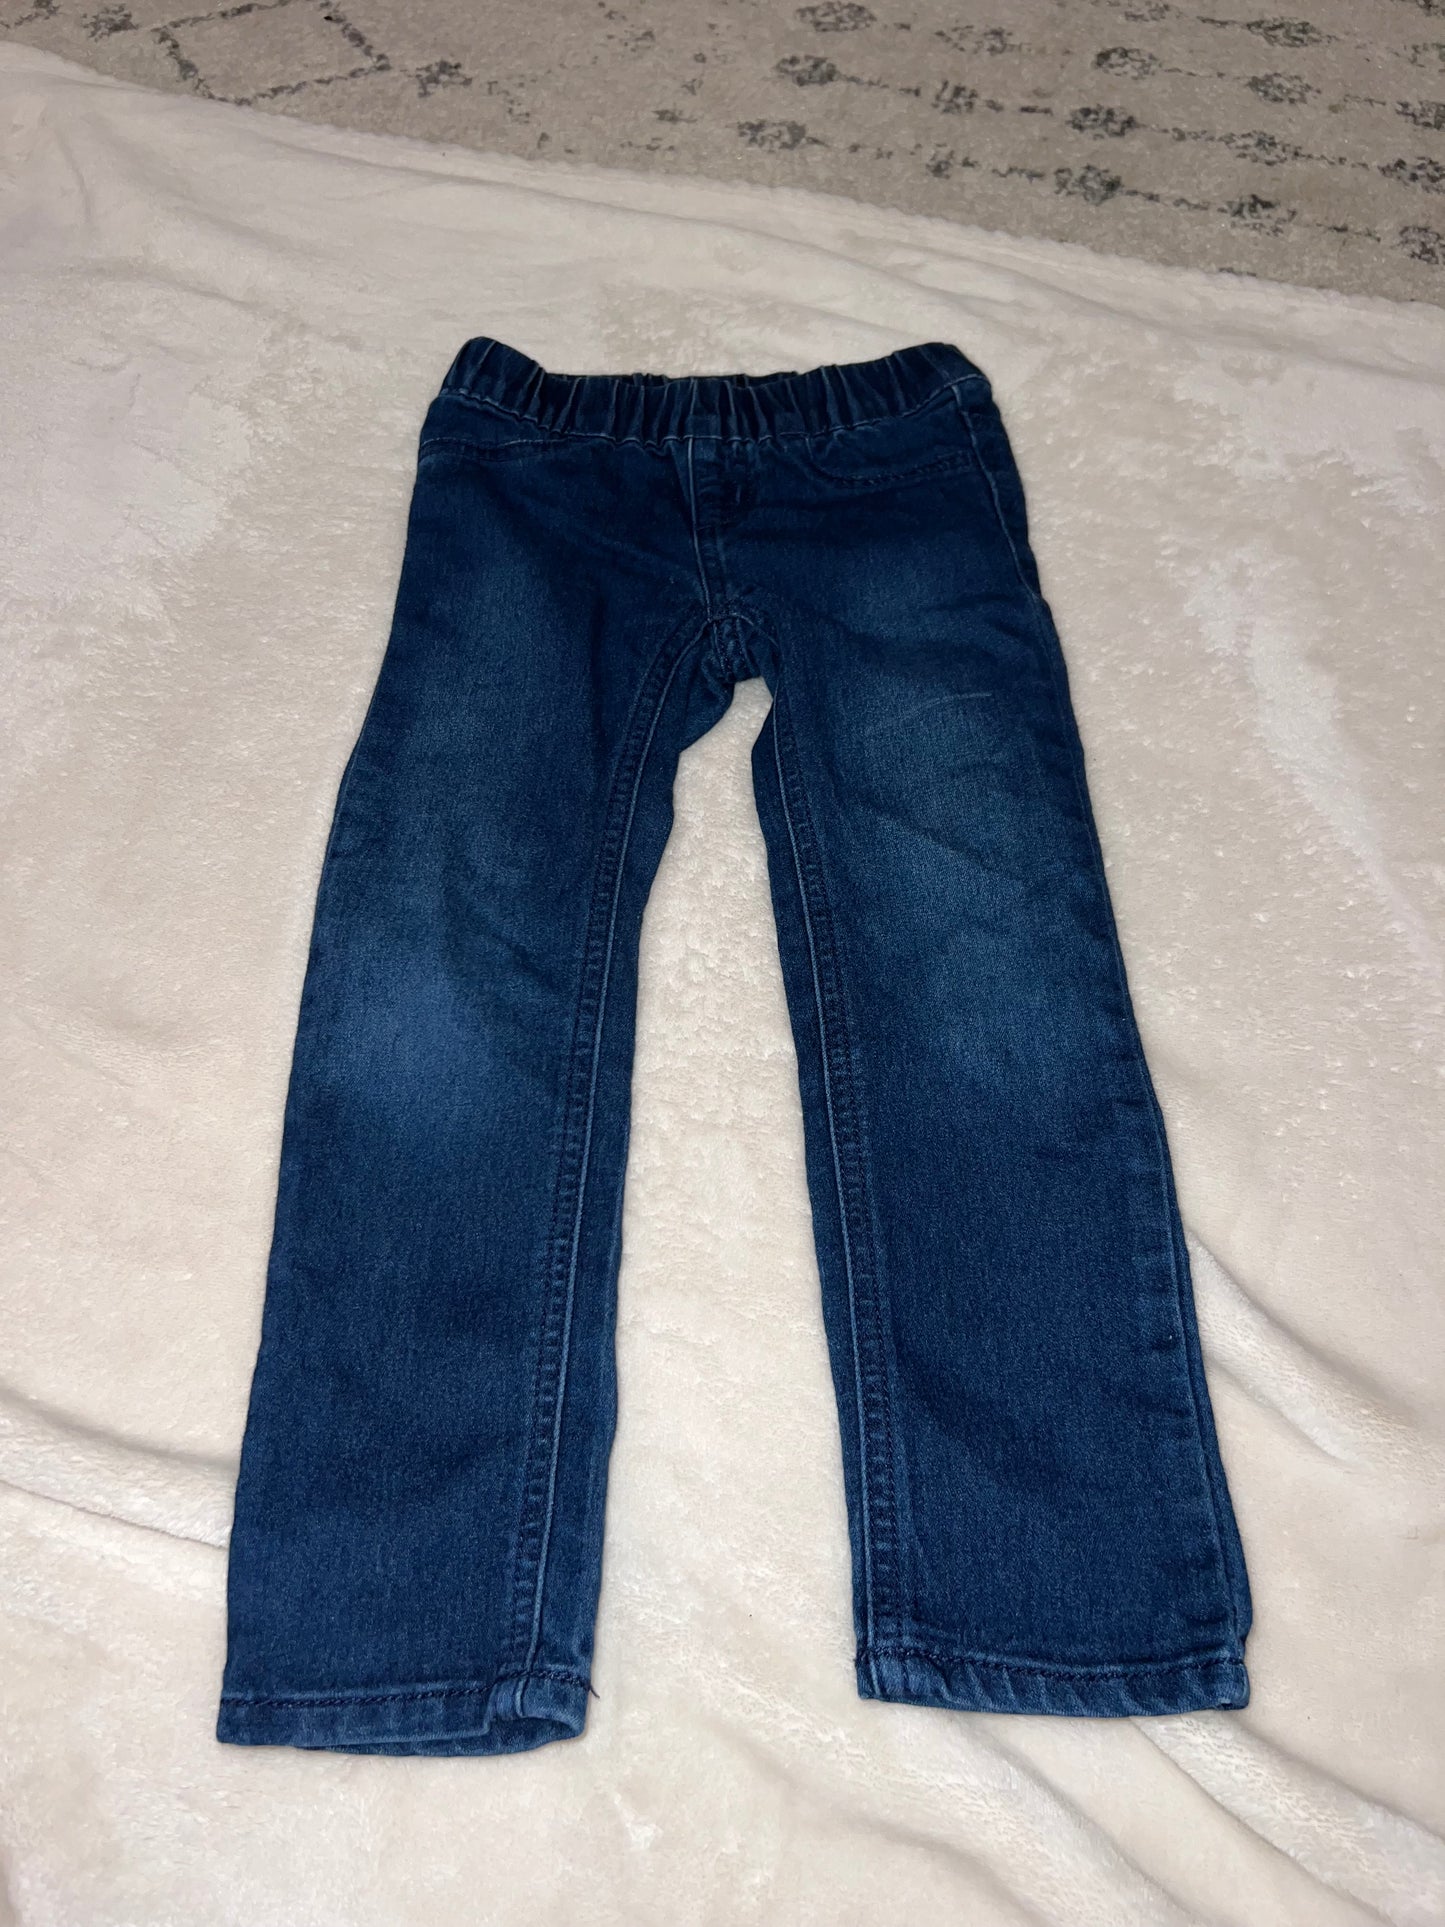 4T Crazy eight elastic jeans